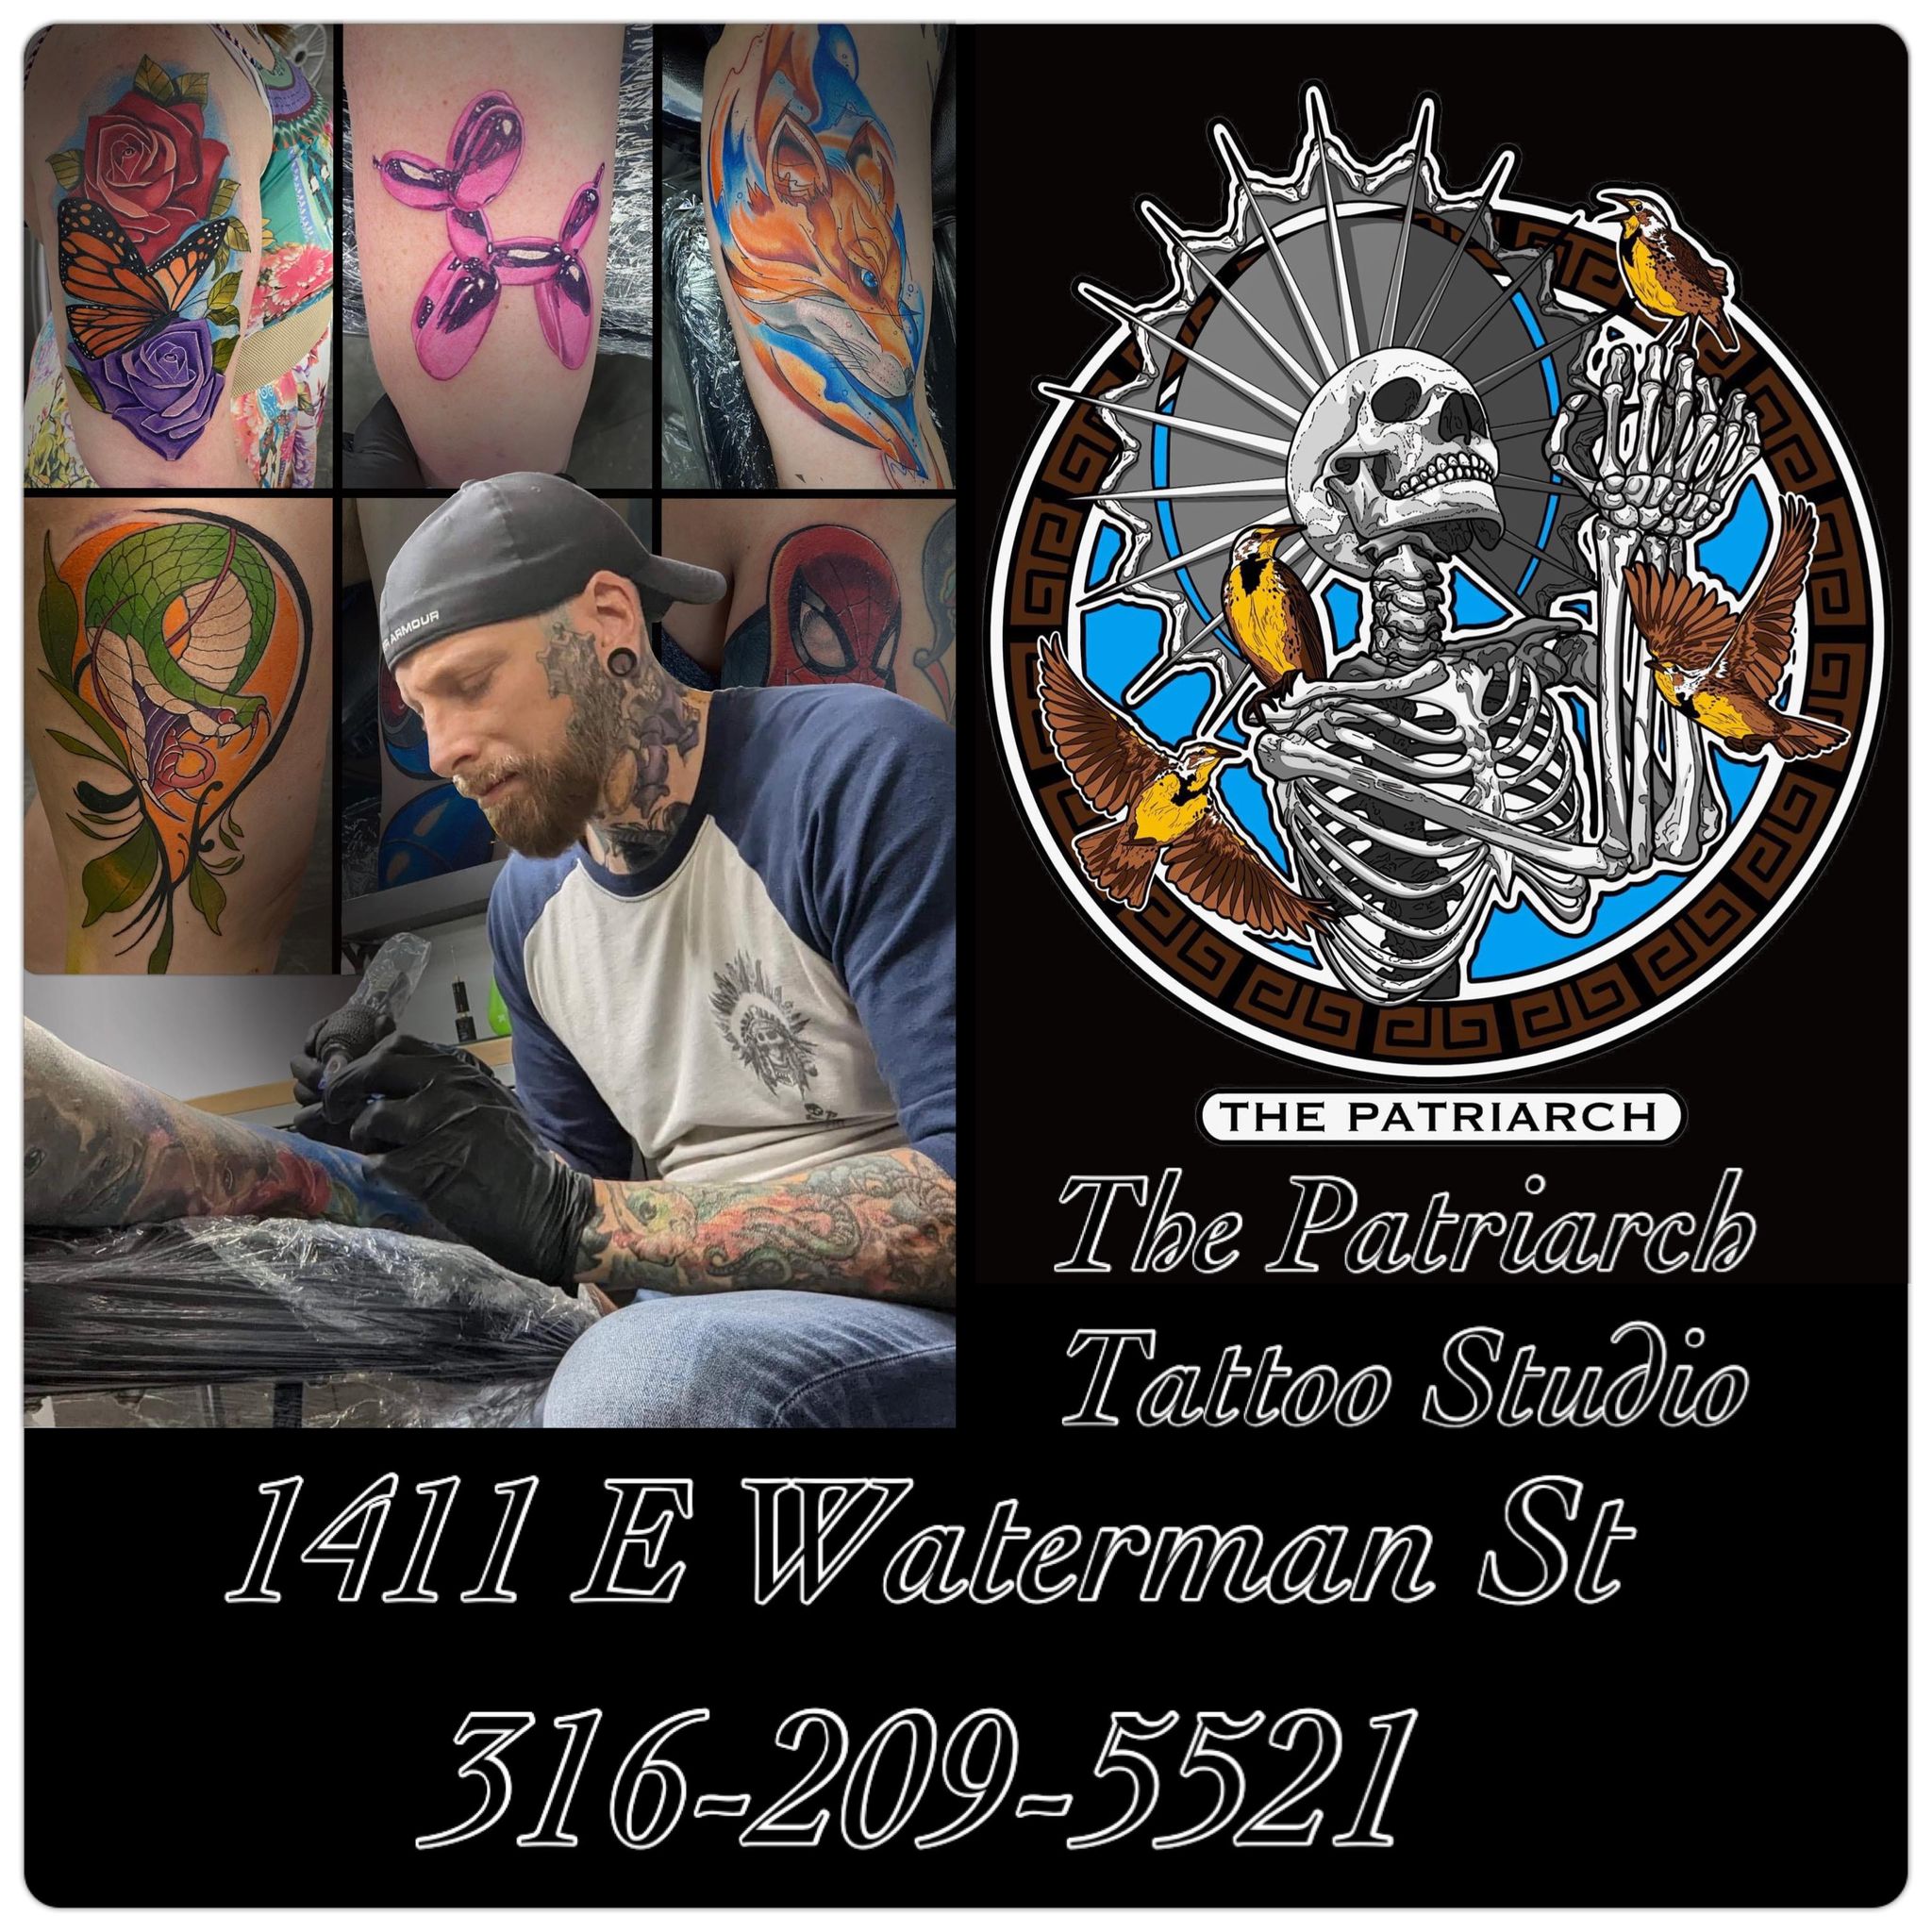 Steel & Ink Studio - Tattoo and Piercing Studio in St Louis, Missouri